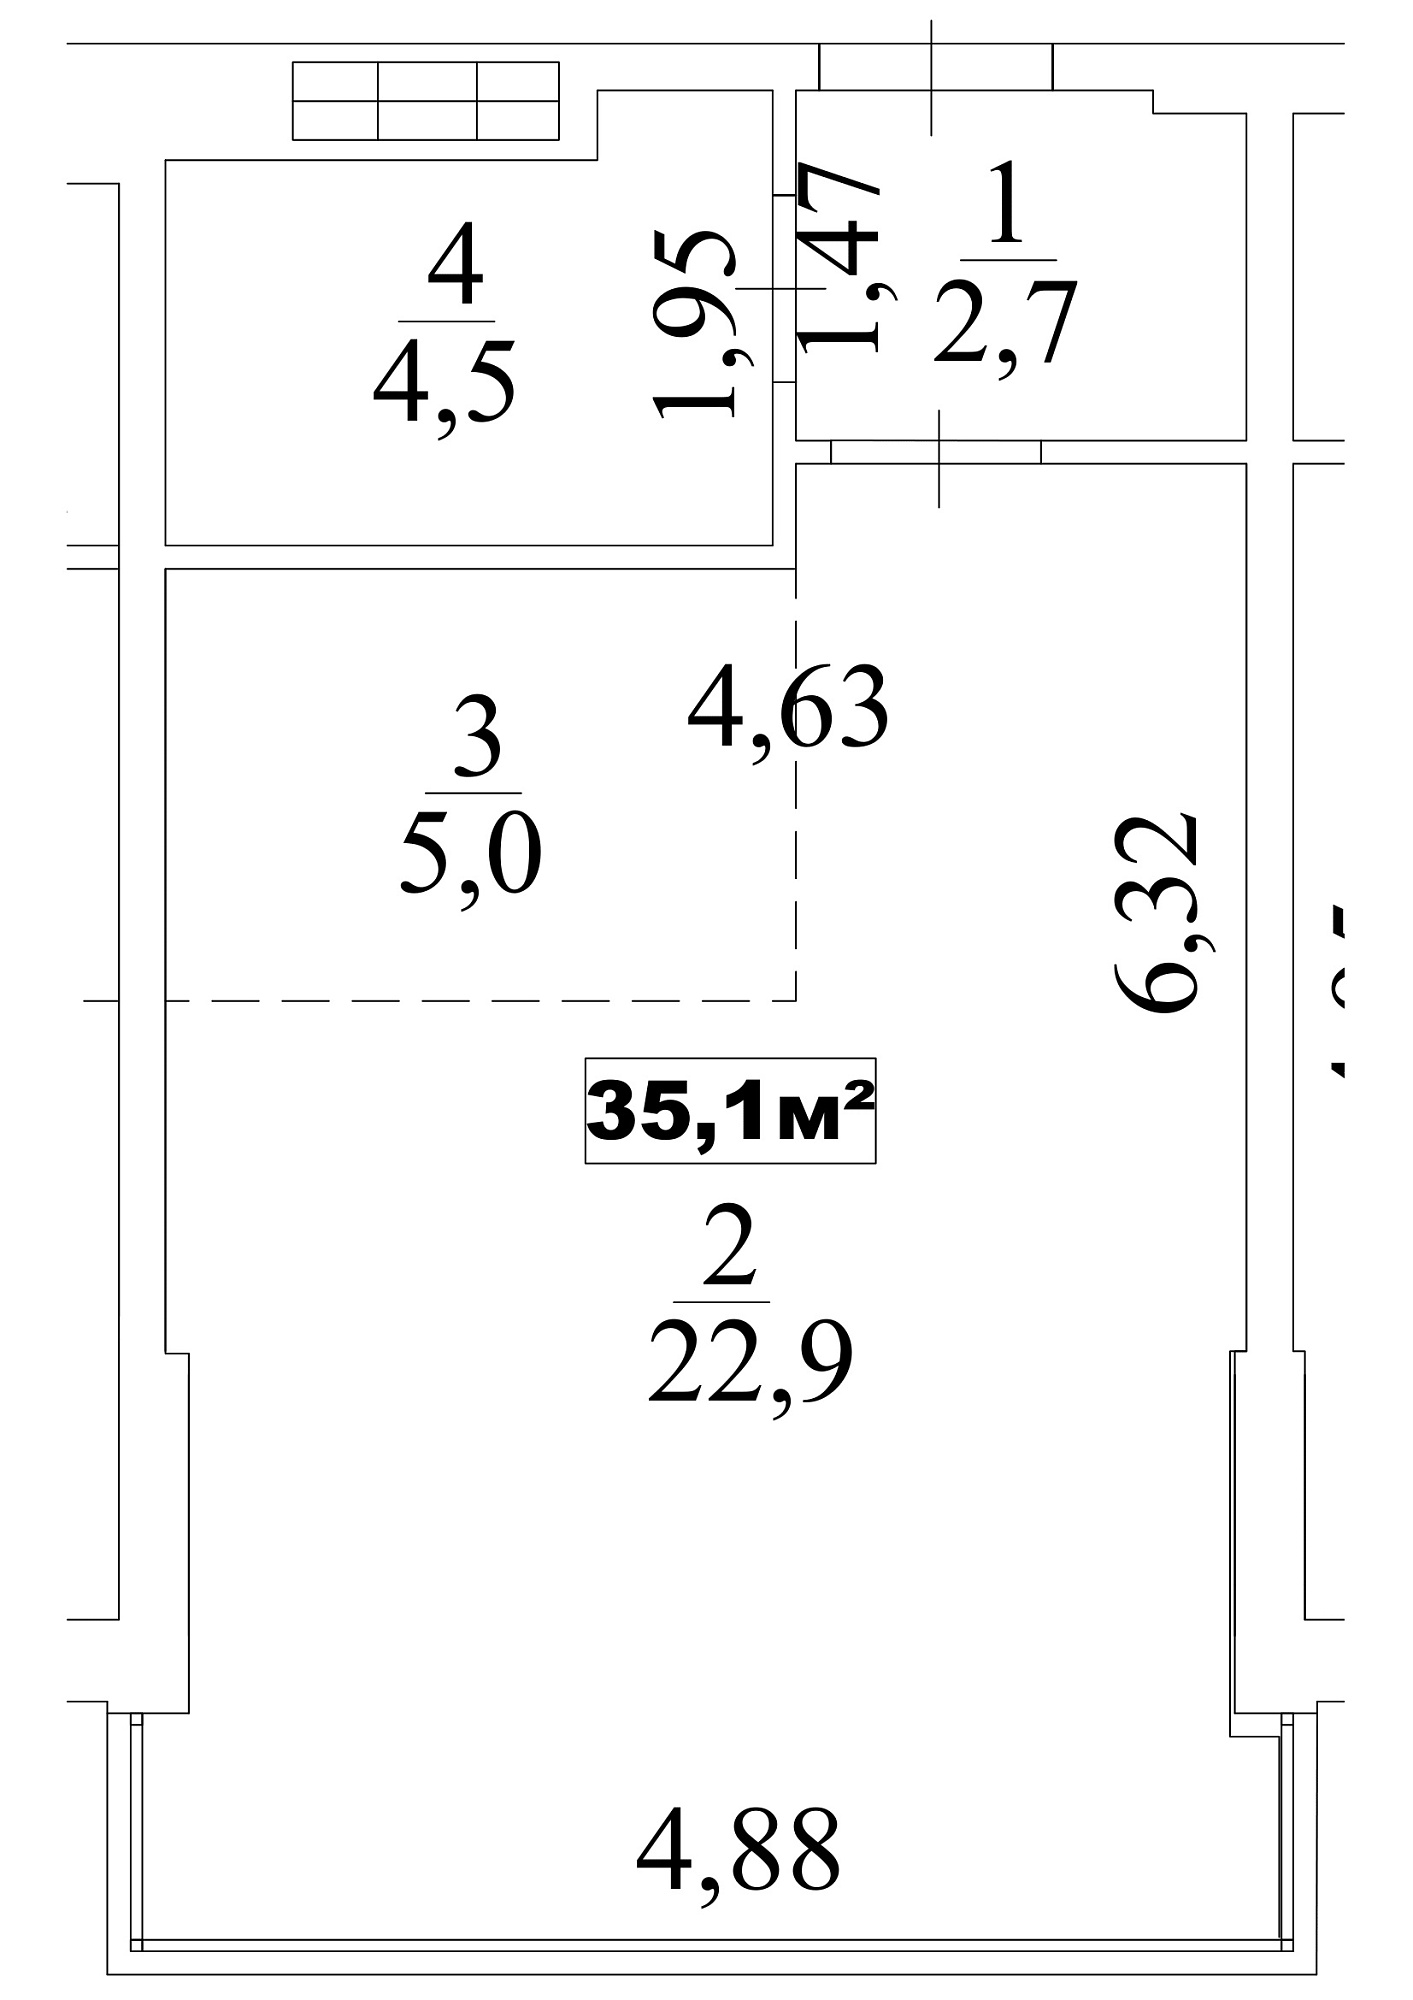 Planning Smart flats area 35.1m2, AB-10-08/0064б.